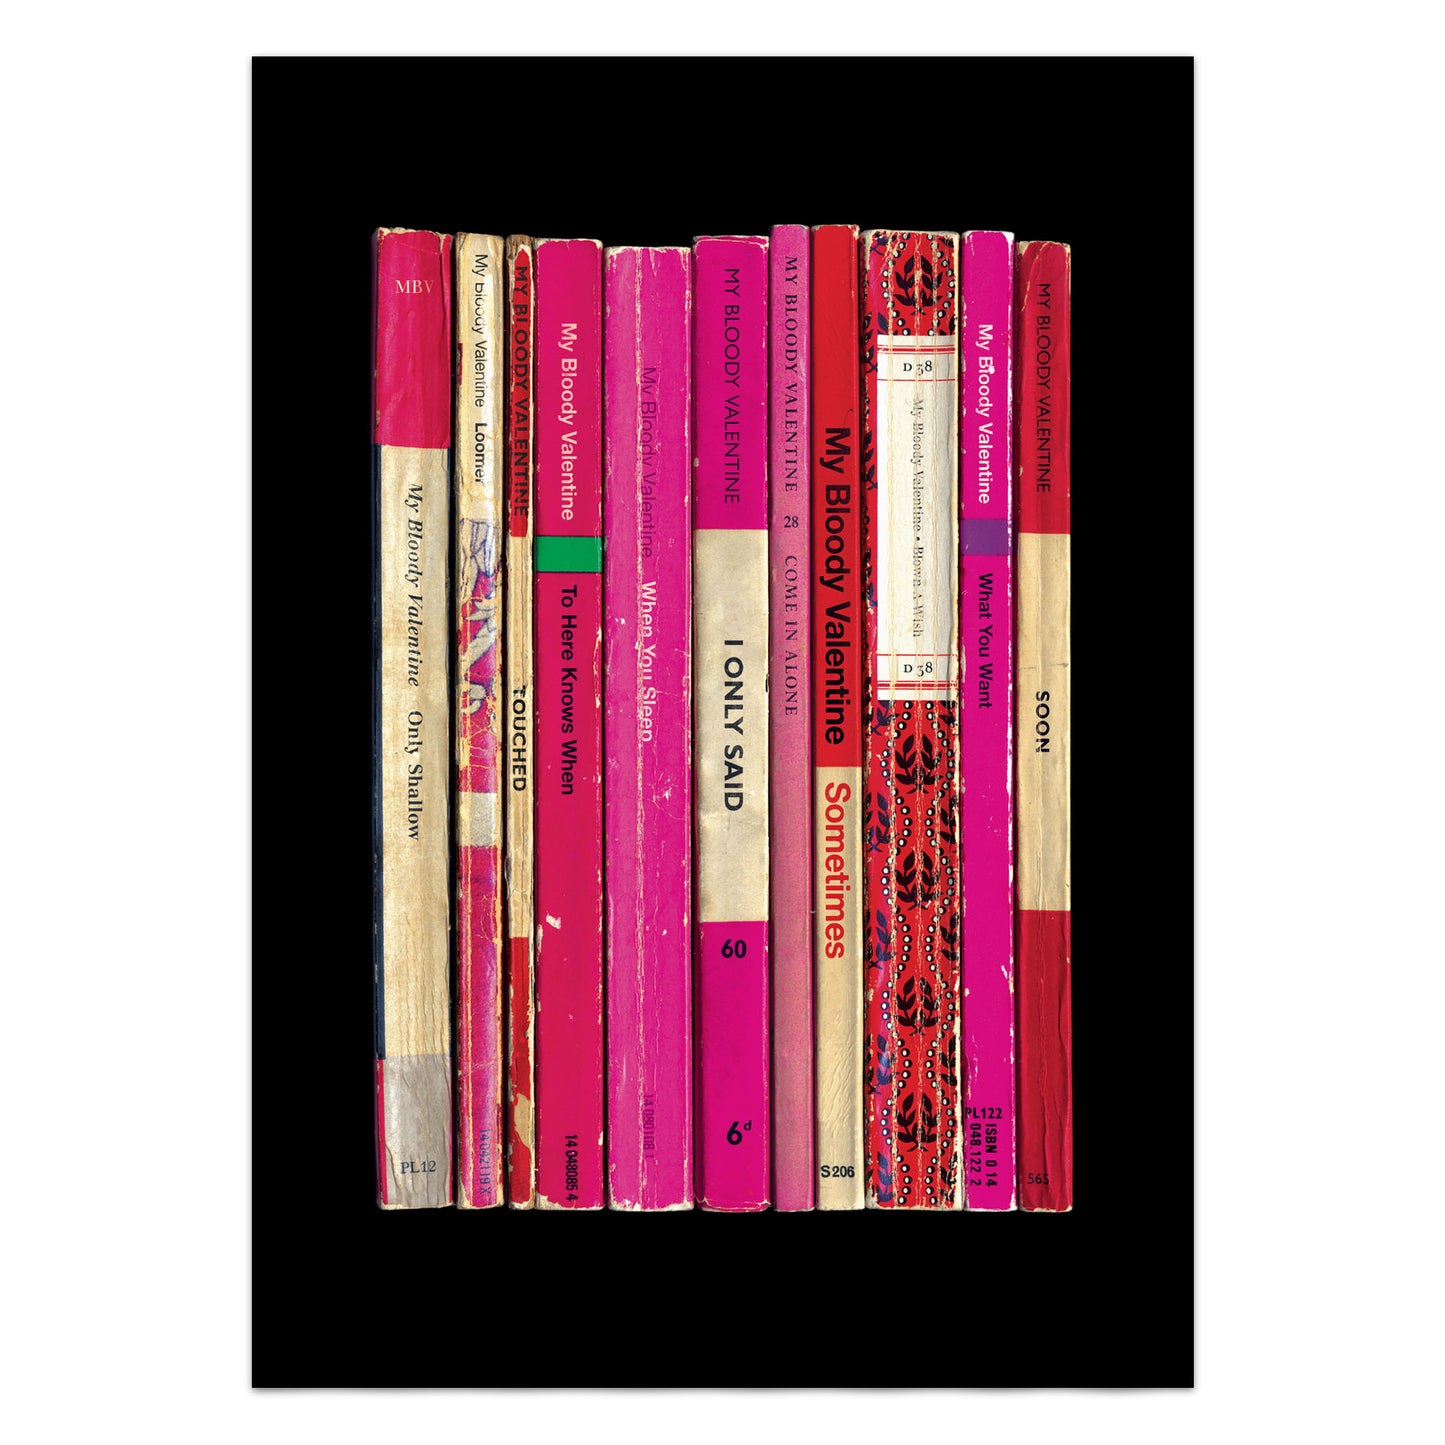 My Bloody Valentine 'Loveless' Album As Penguin Books Poster Print